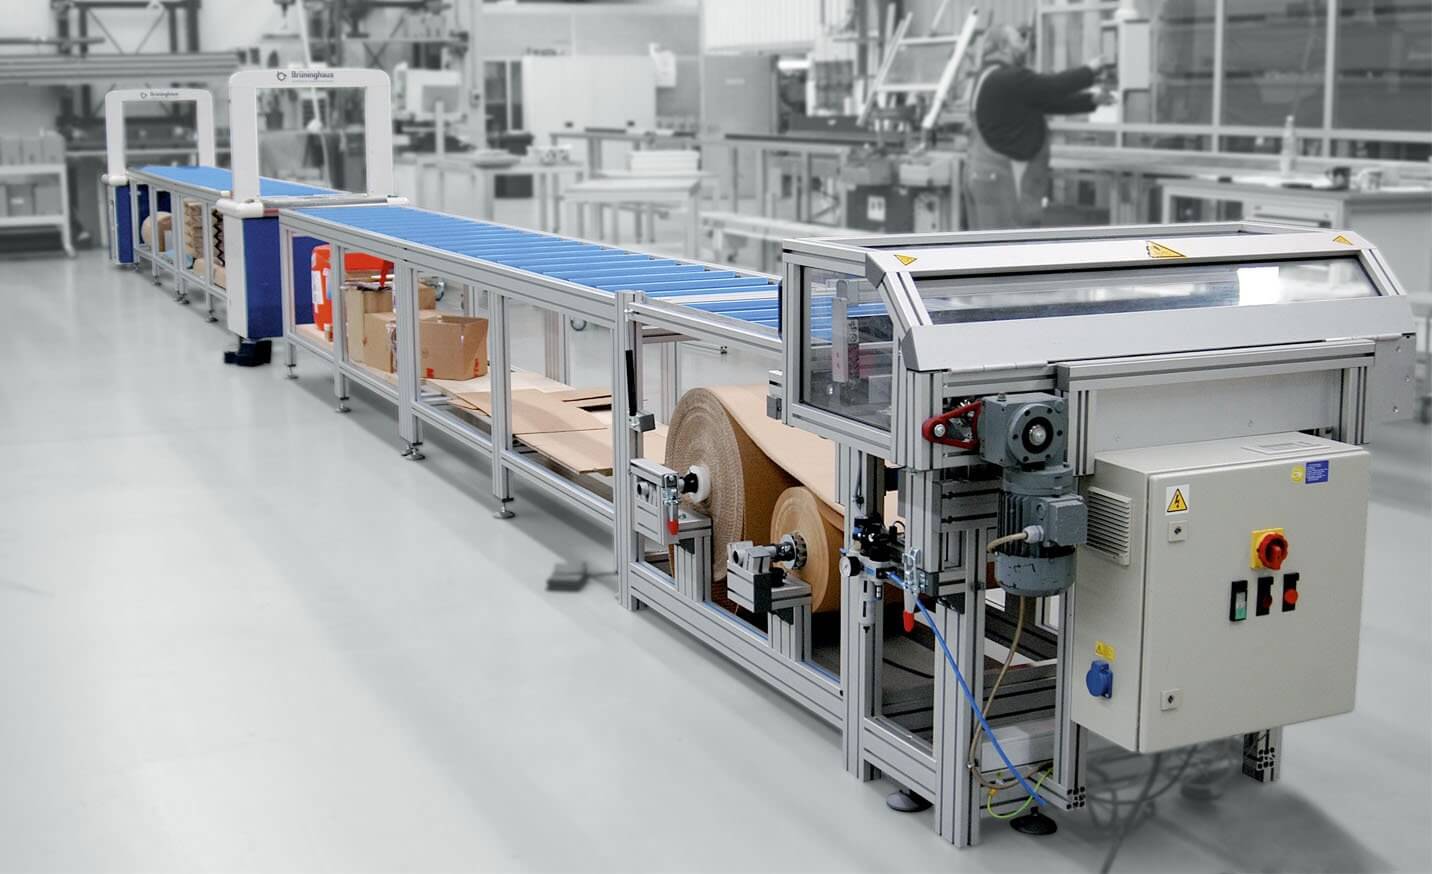 Roller conveyor system - packing station for long goods